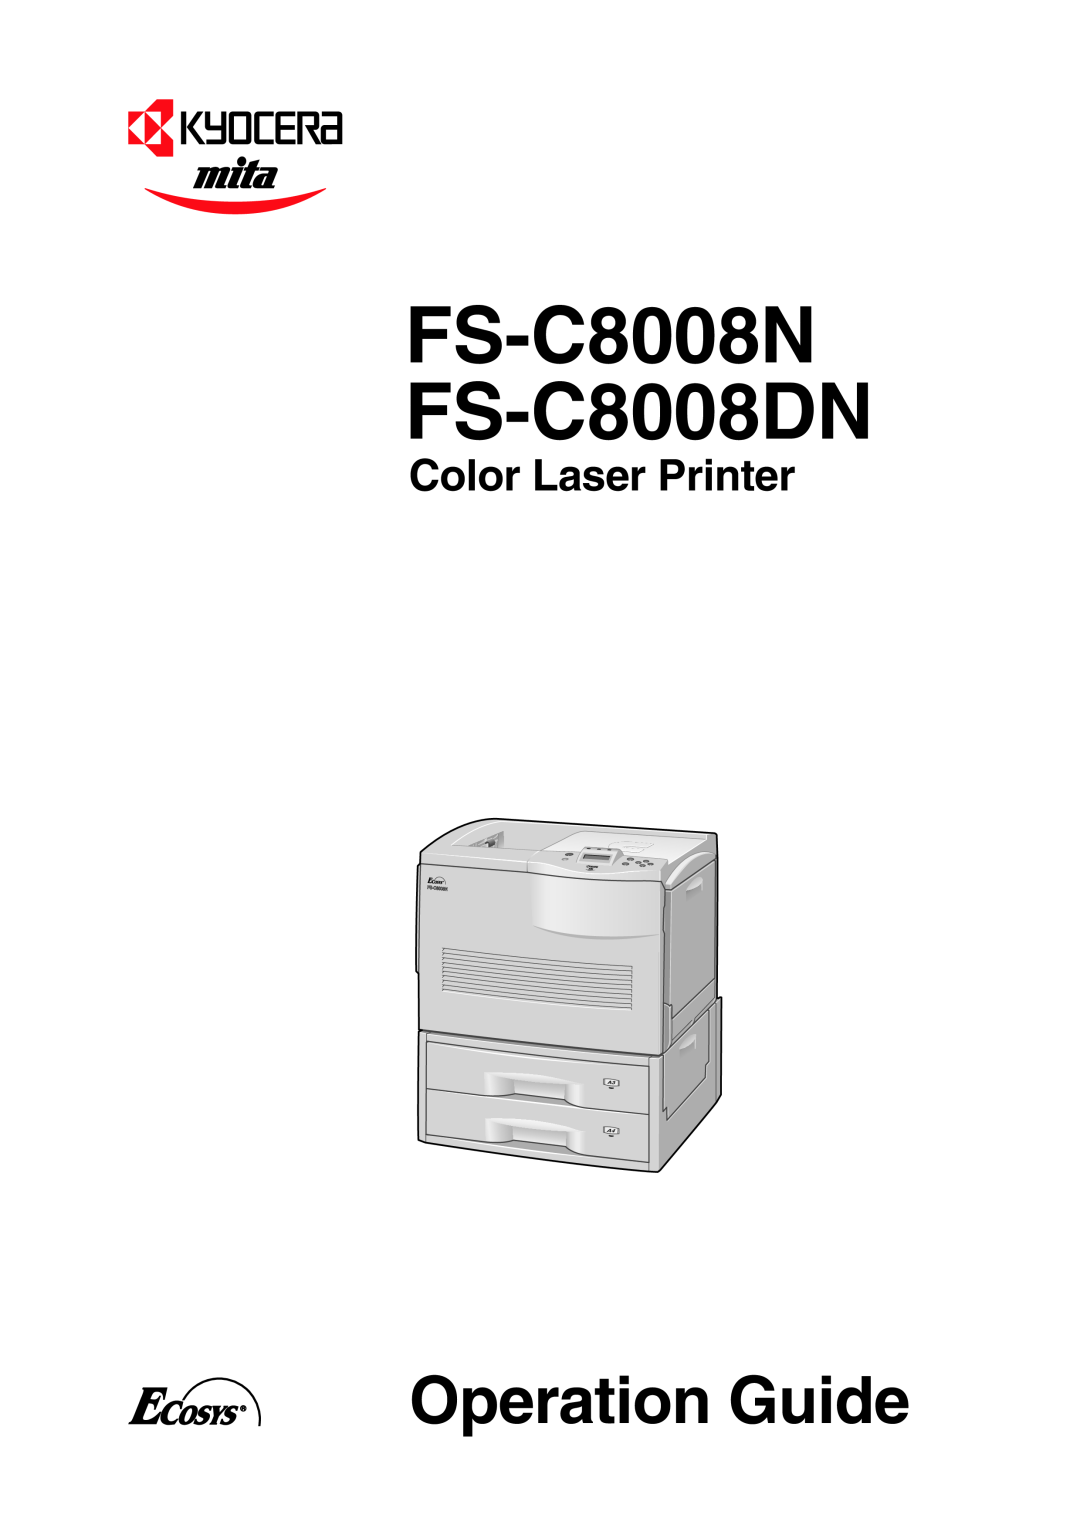 Xerox manual FS-C8008N FS-C8008DN, Operation Guide, Color Laser Printer, FS--C8008N 